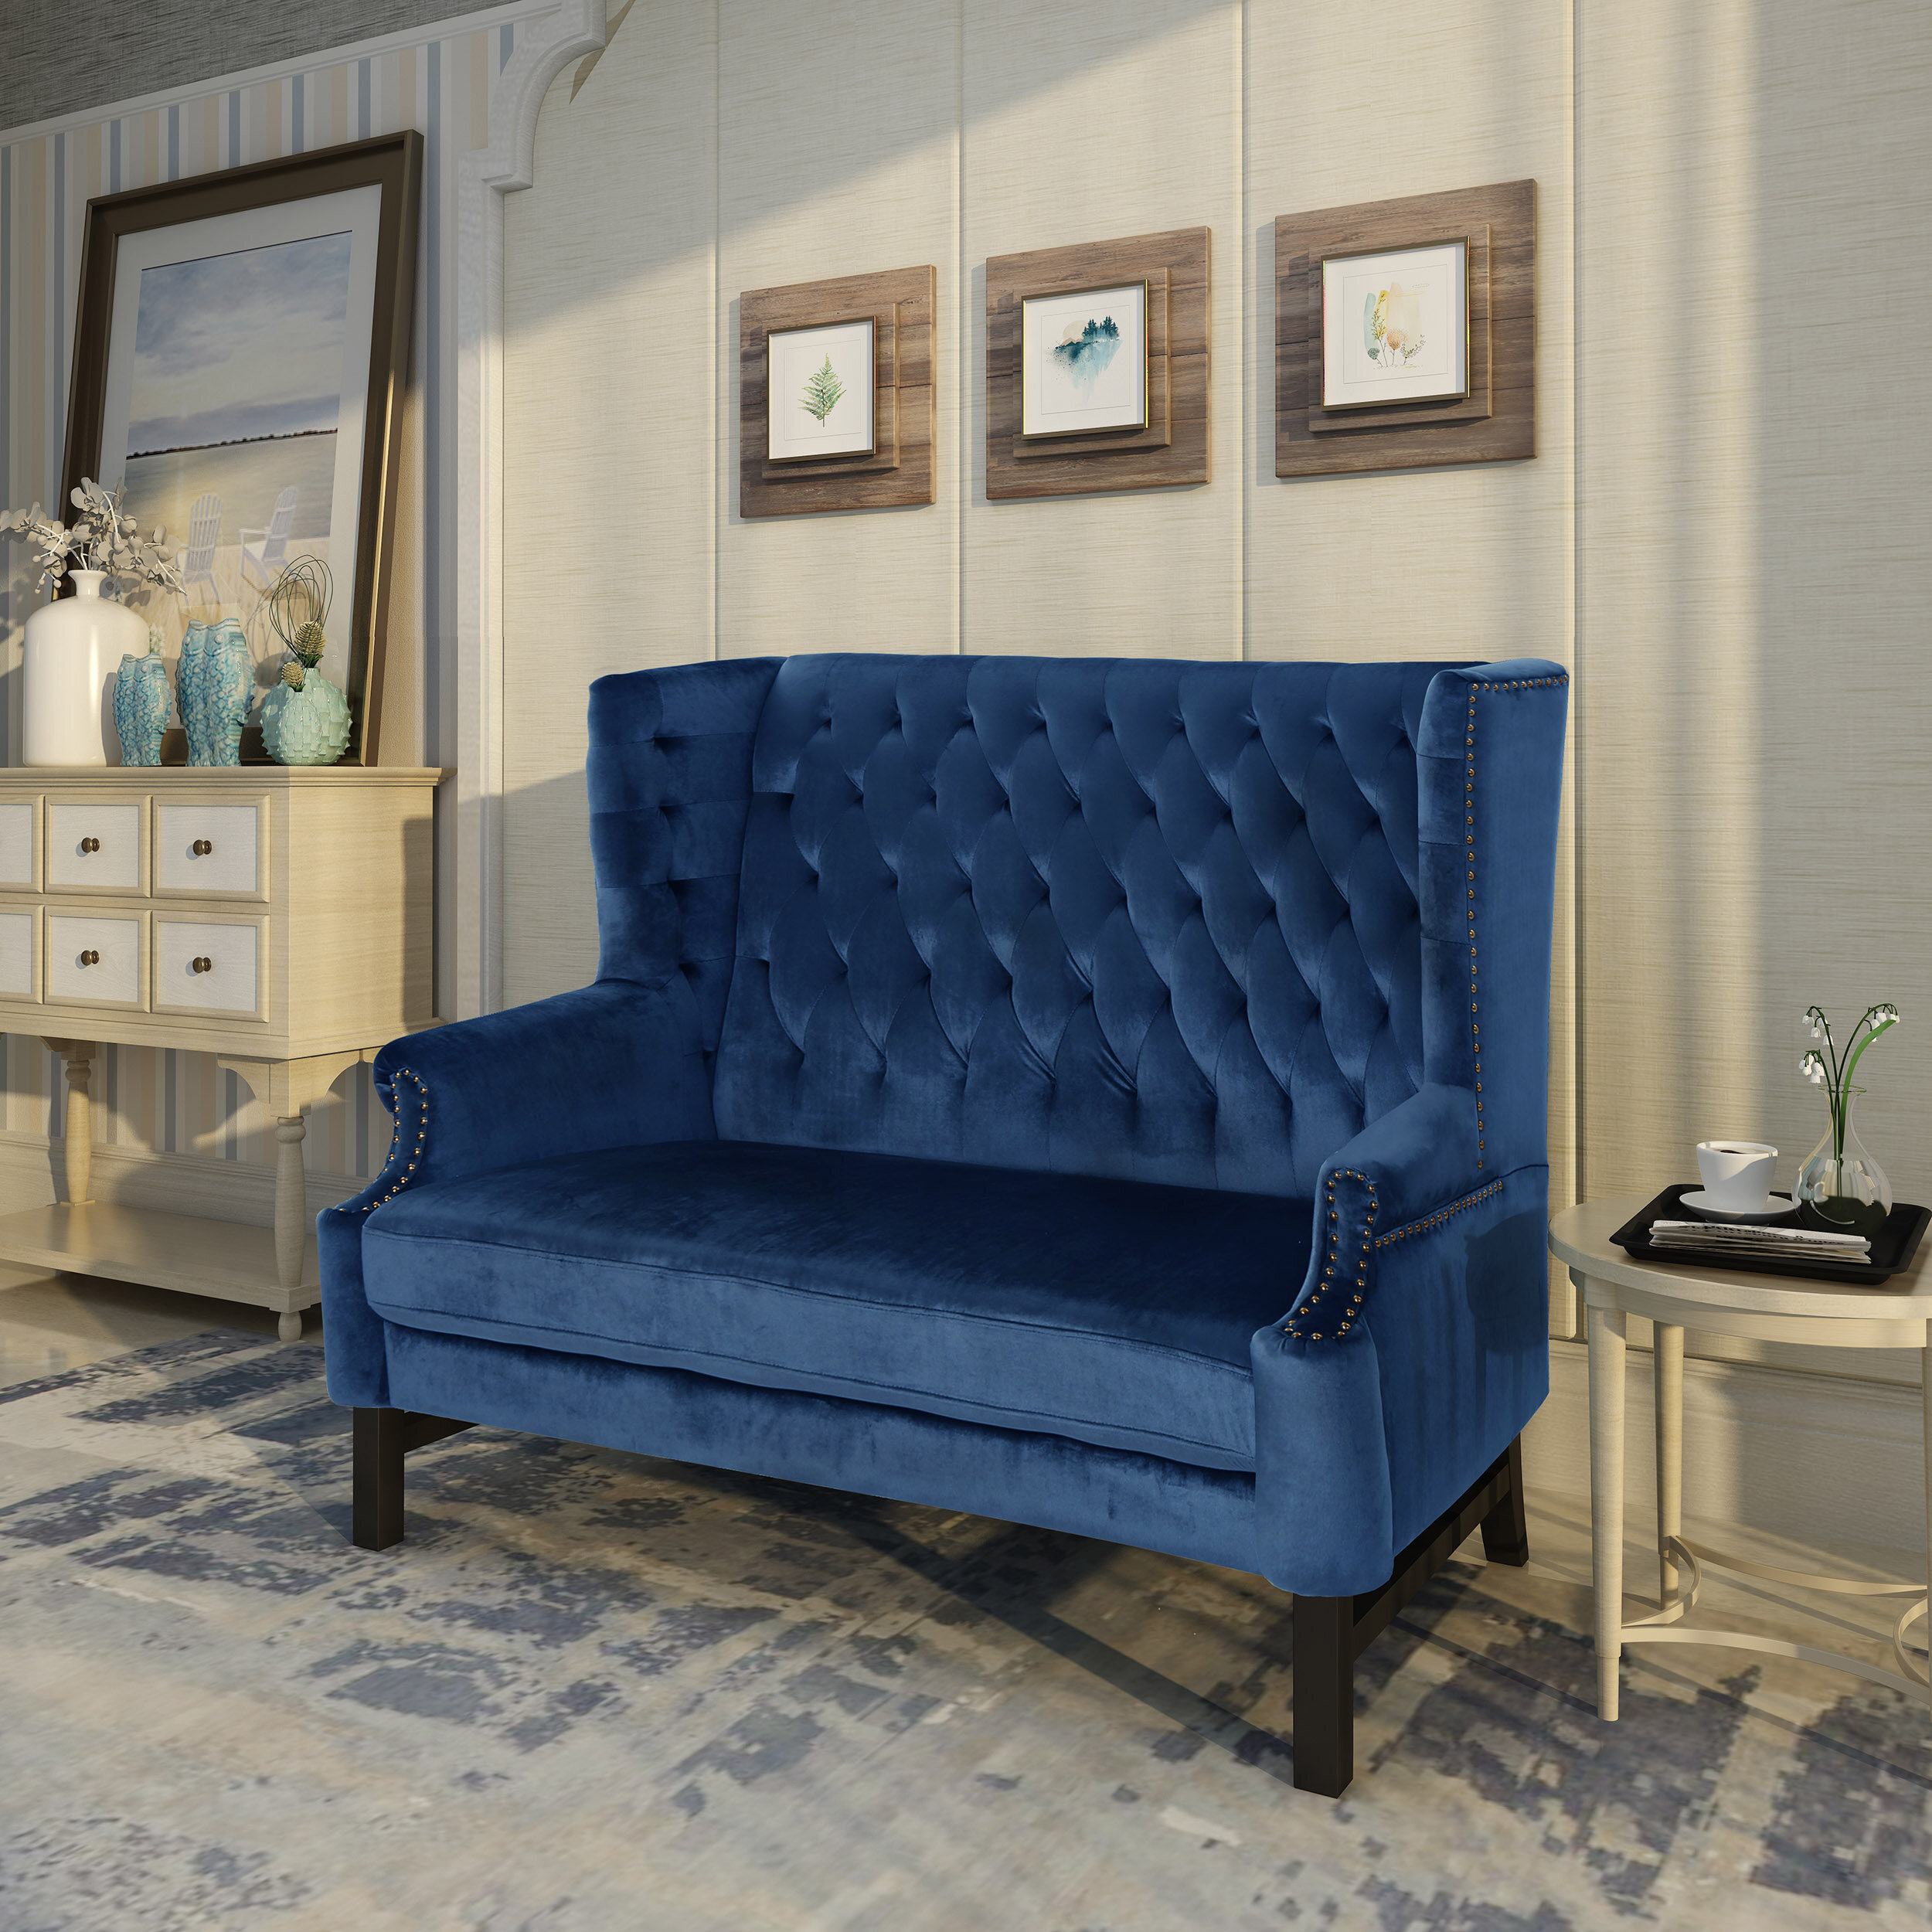 Royal flats Hermès Blue size 37 EU in Suede - 34321593